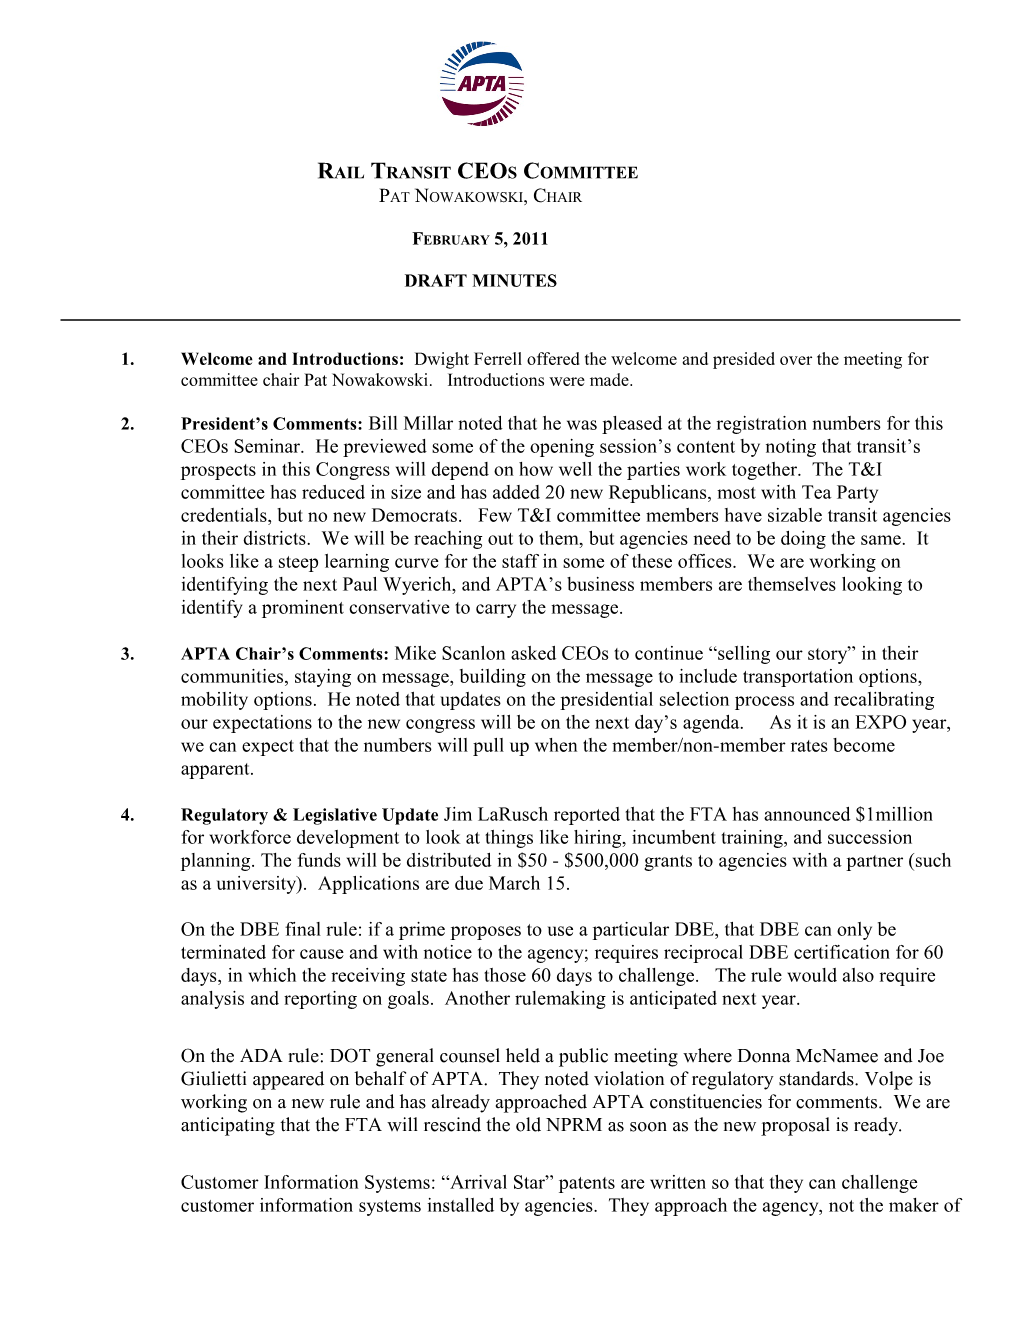 Rail-Transit-Ceos-Subcommittee-Draft-Minutes-February-2011